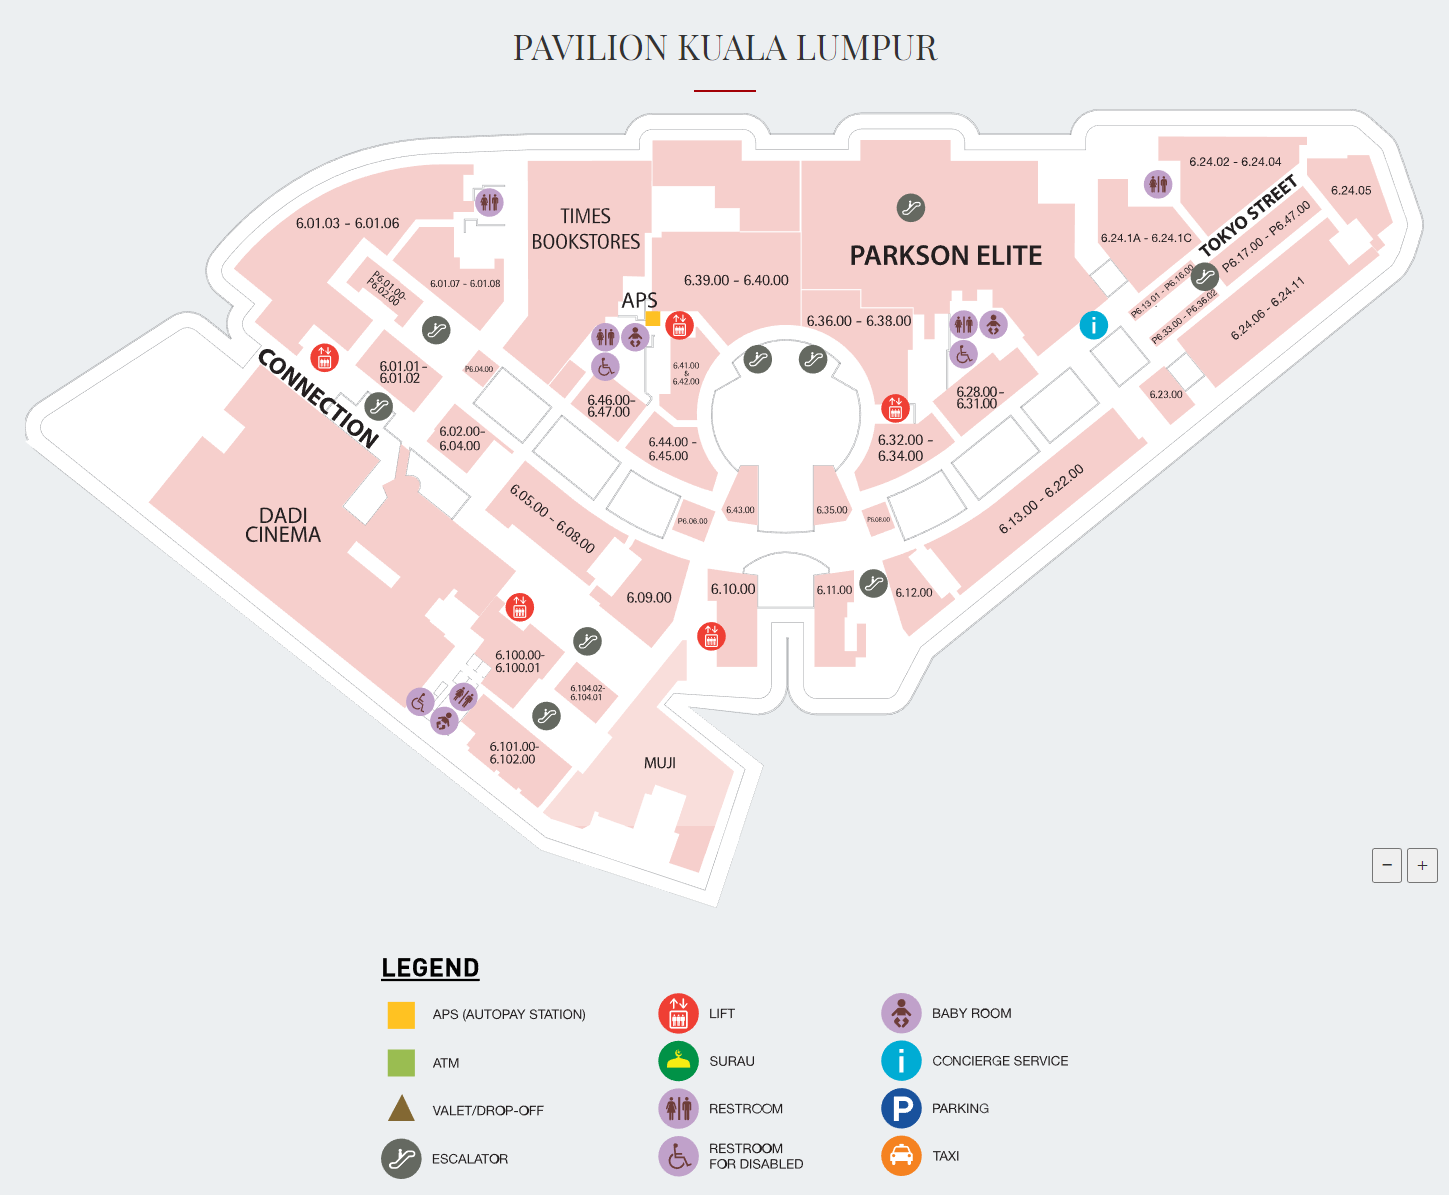 Pavilion Mall in Bukit Bintang, Kuala Lumpur, Malaysia - Kuala Lumpur Guide